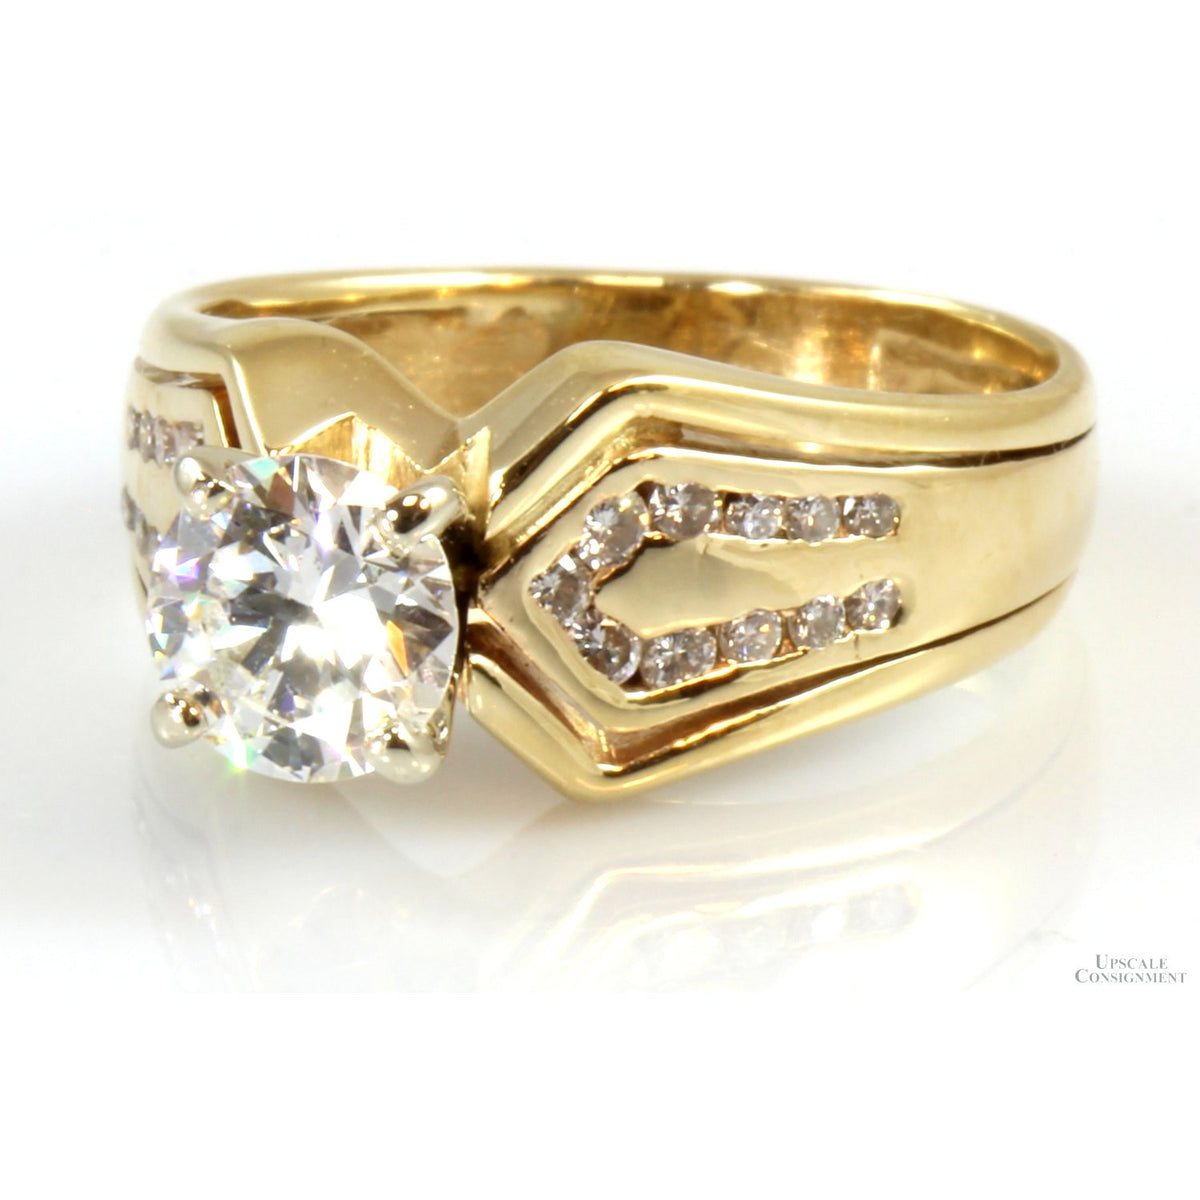 14K Gold 1.04ctw Diamond Ring .83ct Brilliant Diamond Solitaire